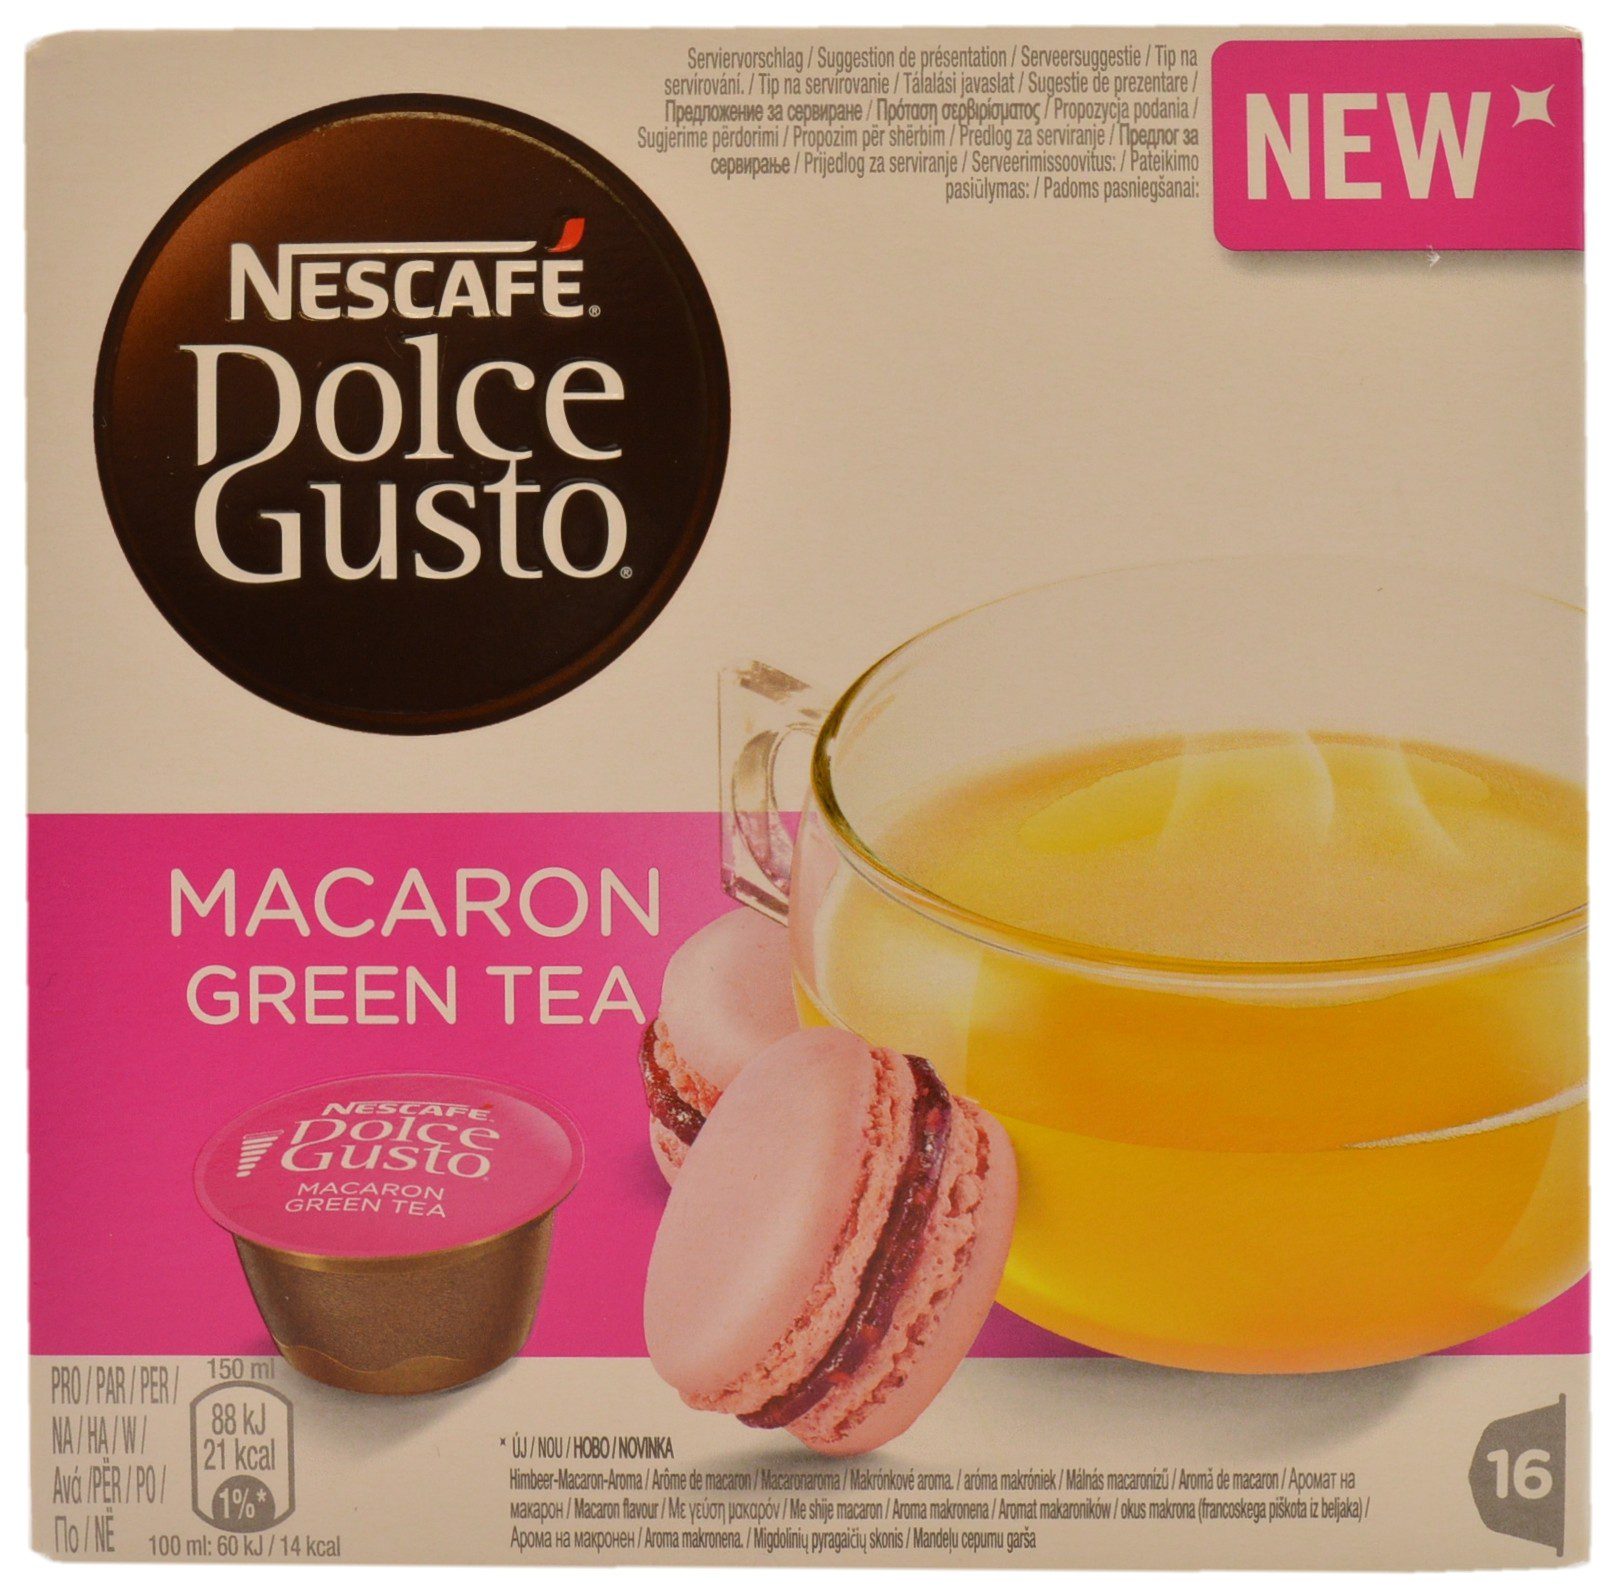 Macaron Green Tea